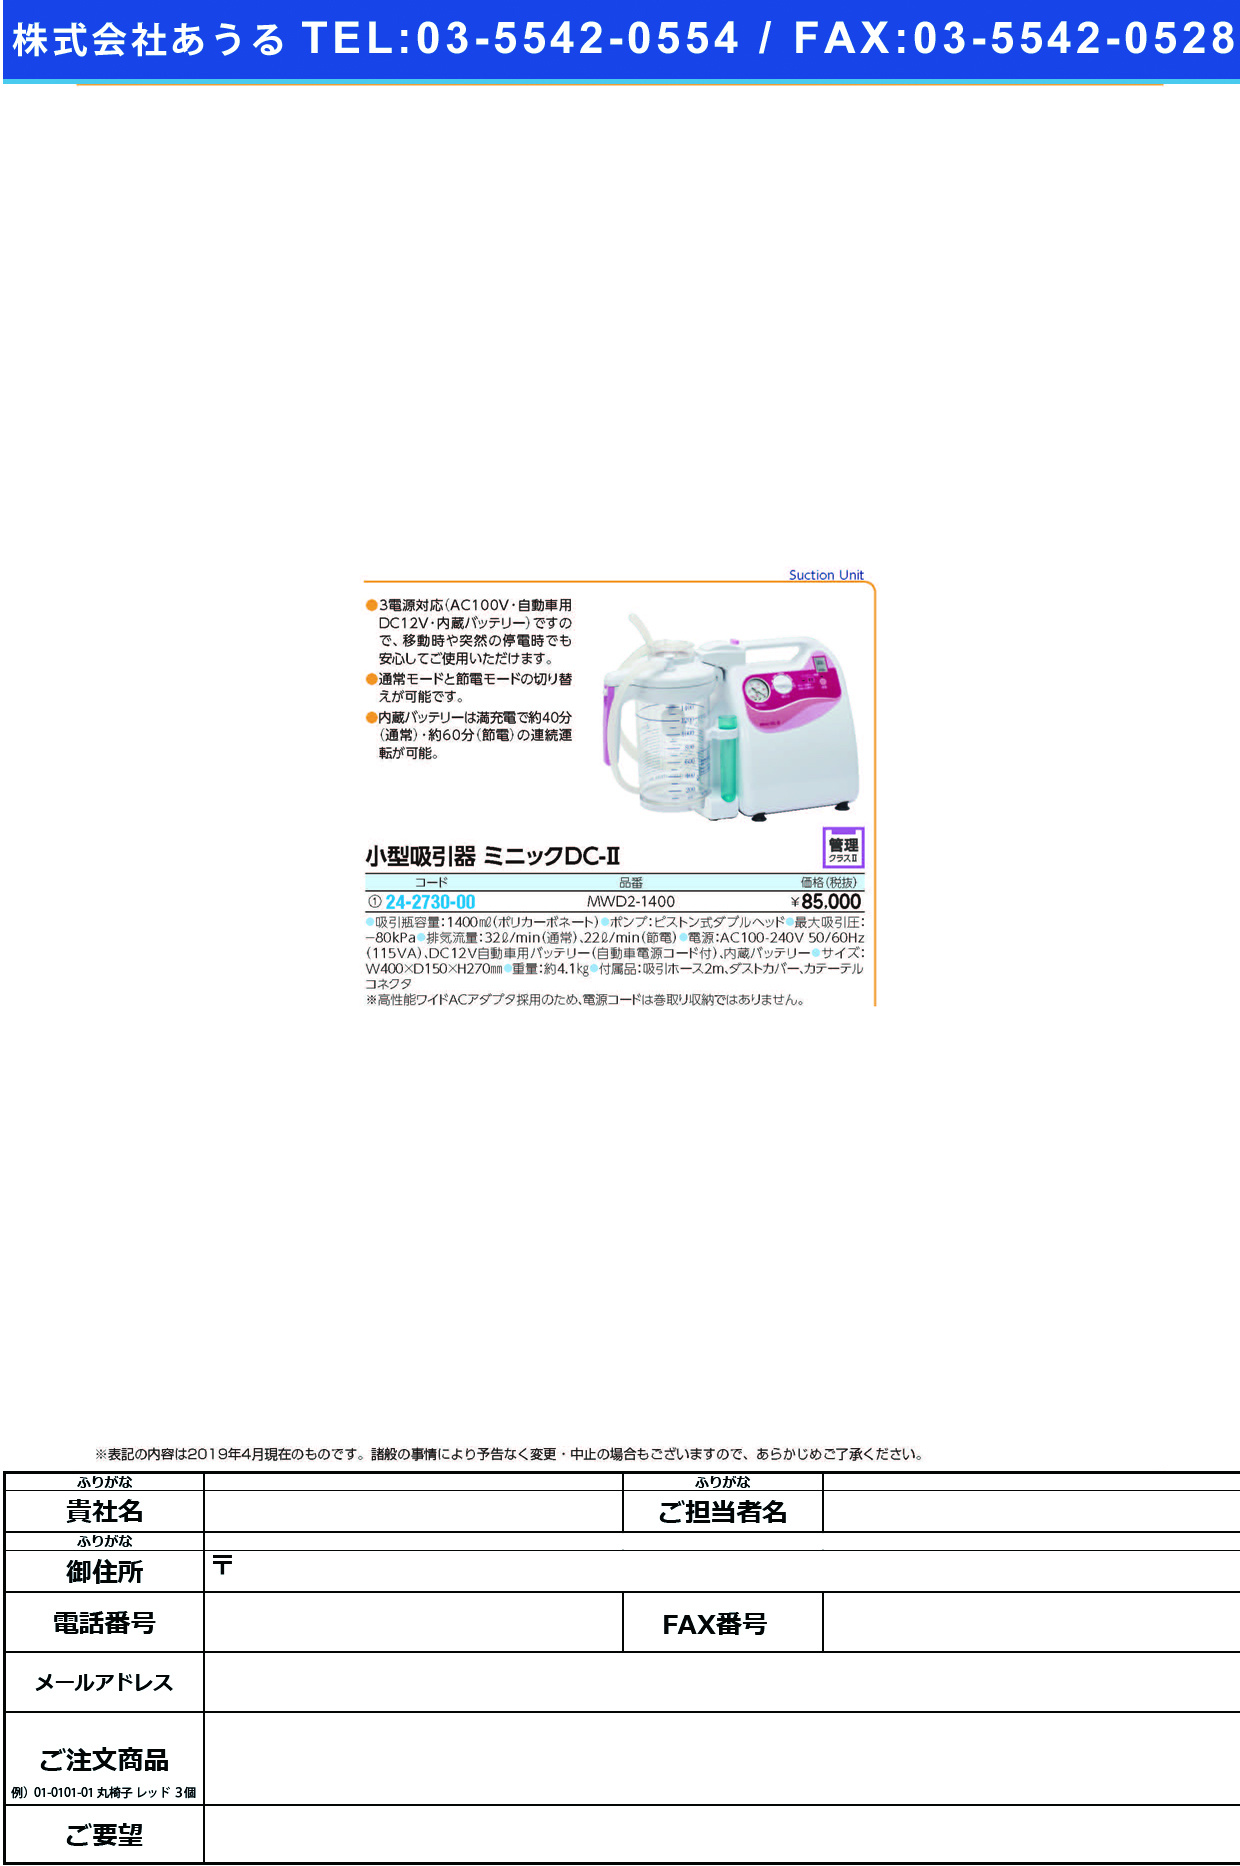 (24-2730-00)小型吸引器ミニックＤＣ－Ⅱ MWD2-1400 ｺｶﾞﾀｷｭｳｲﾝｷﾐﾆｯｸDC-2(新鋭工業)【1台単位】【2019年カタログ商品】